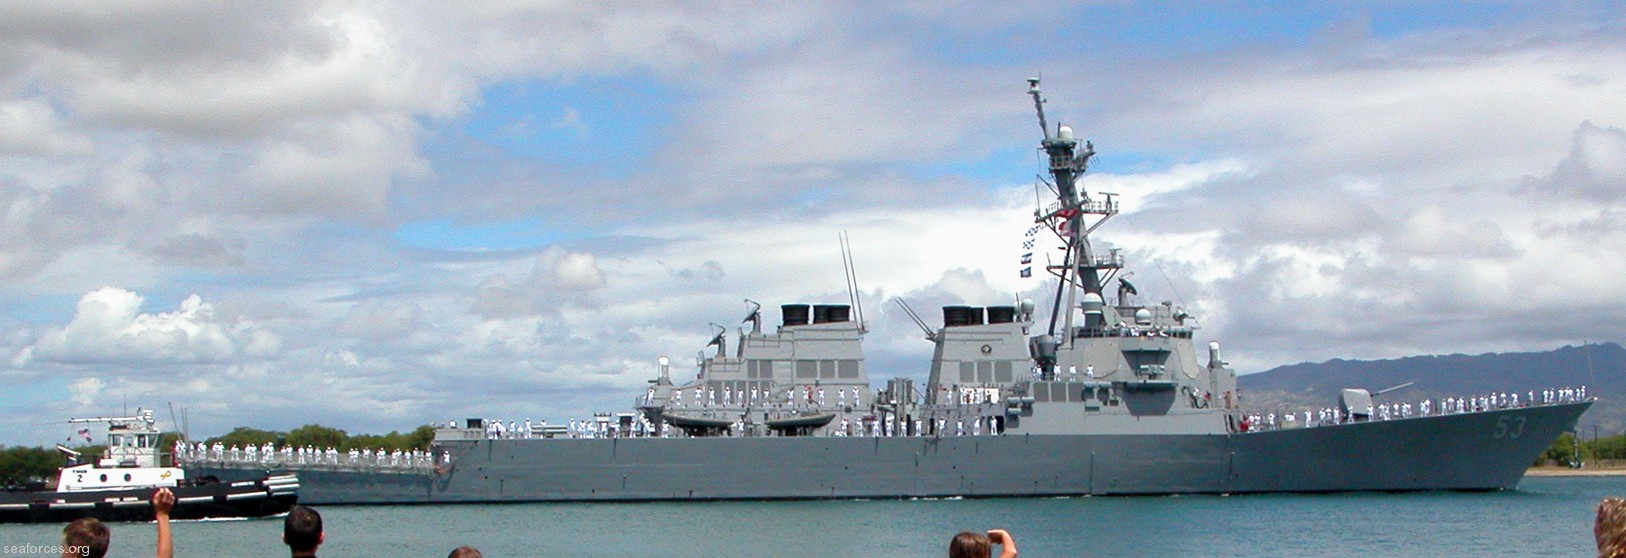 ddg-53 uss john paul jones destroyer us navy 32 pearl harbor hawaii